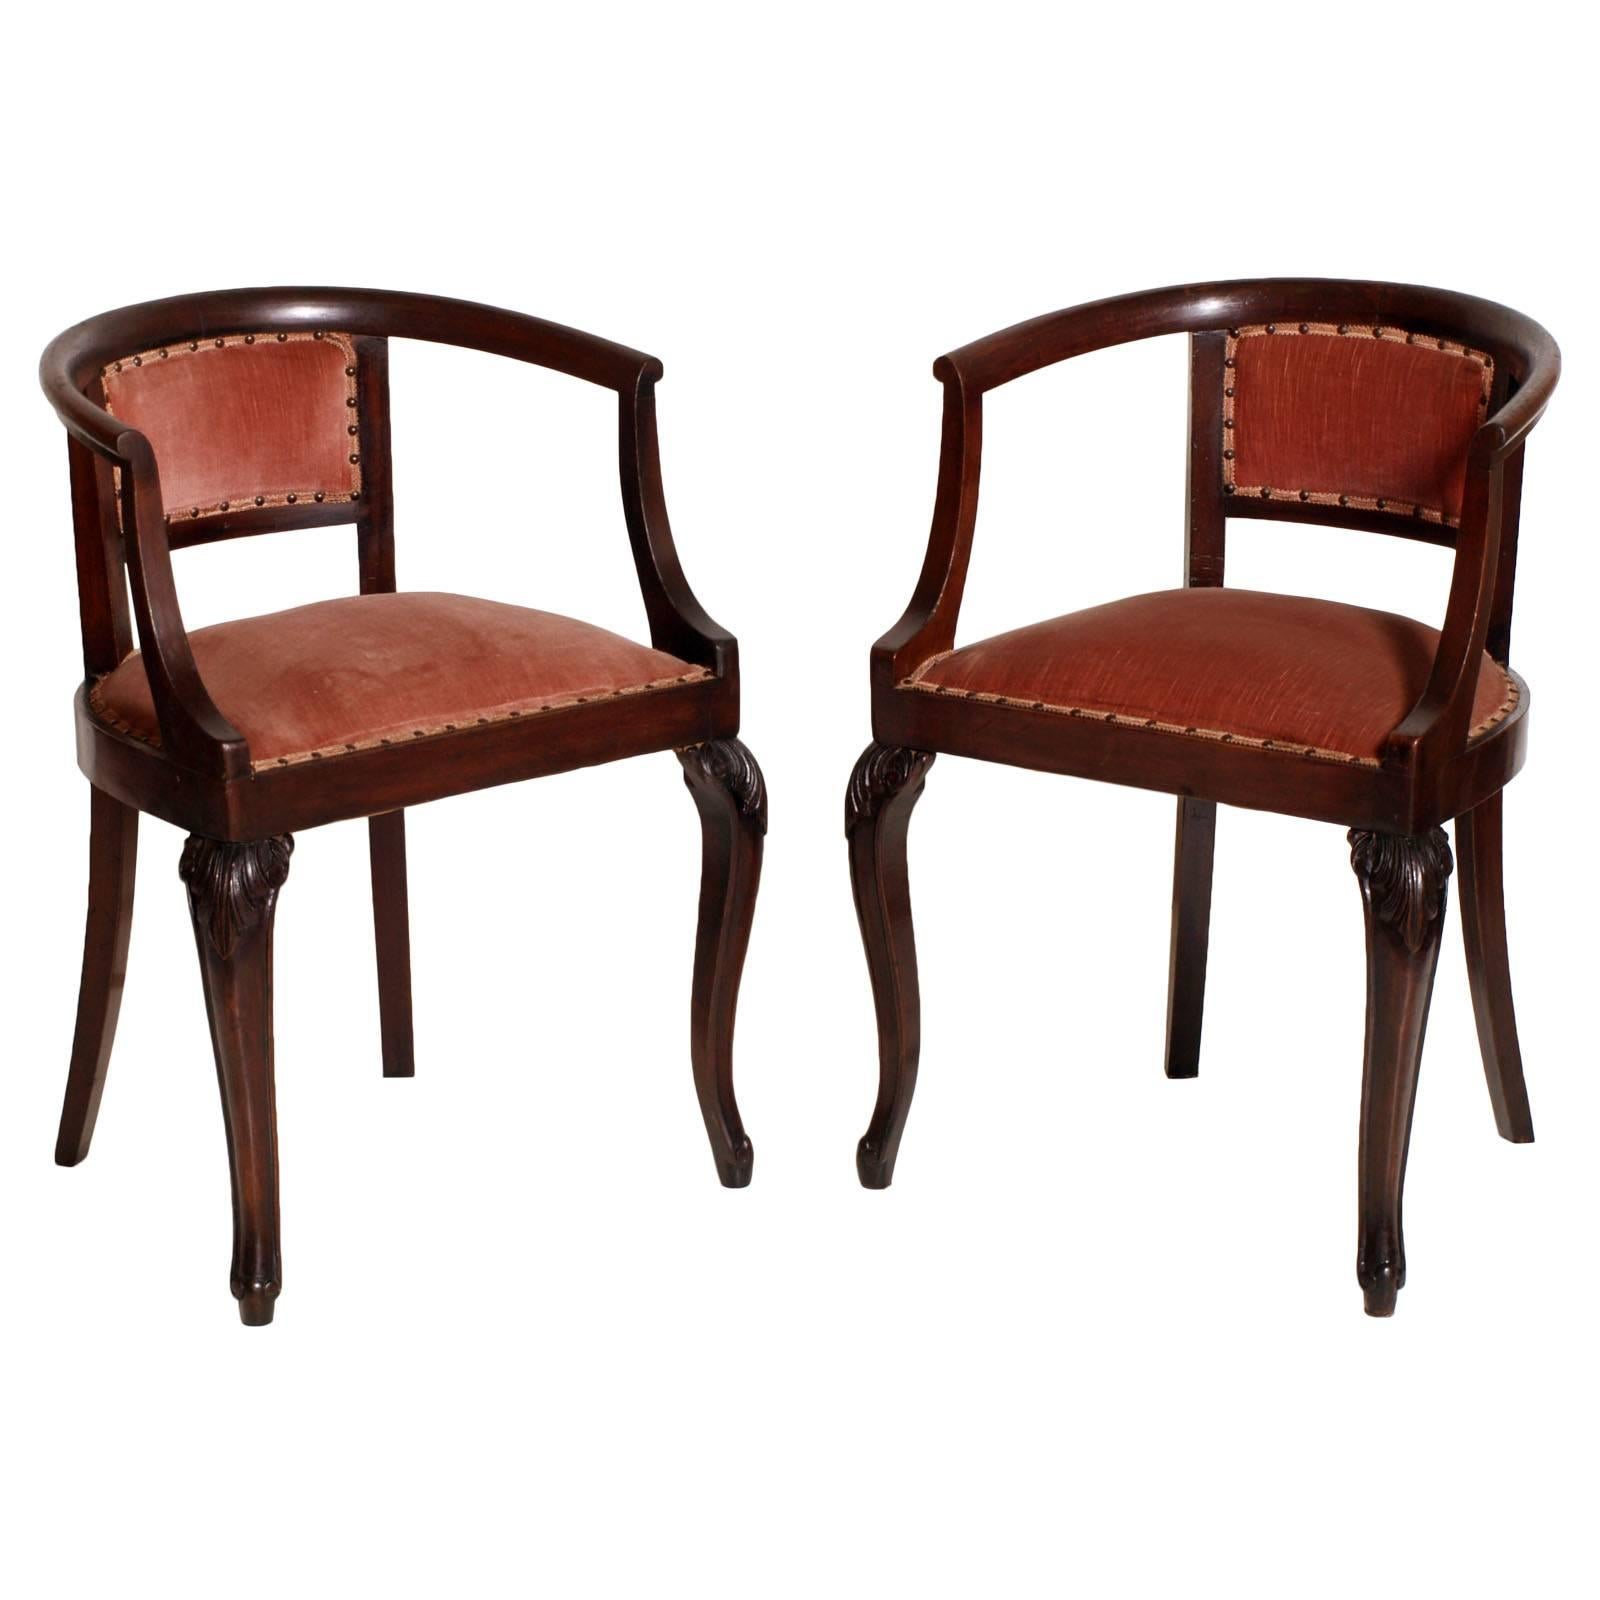 1910s Art Nouveau Pair of Pozzeto Chairs, Hand-Carved Walnut, Original Fabric